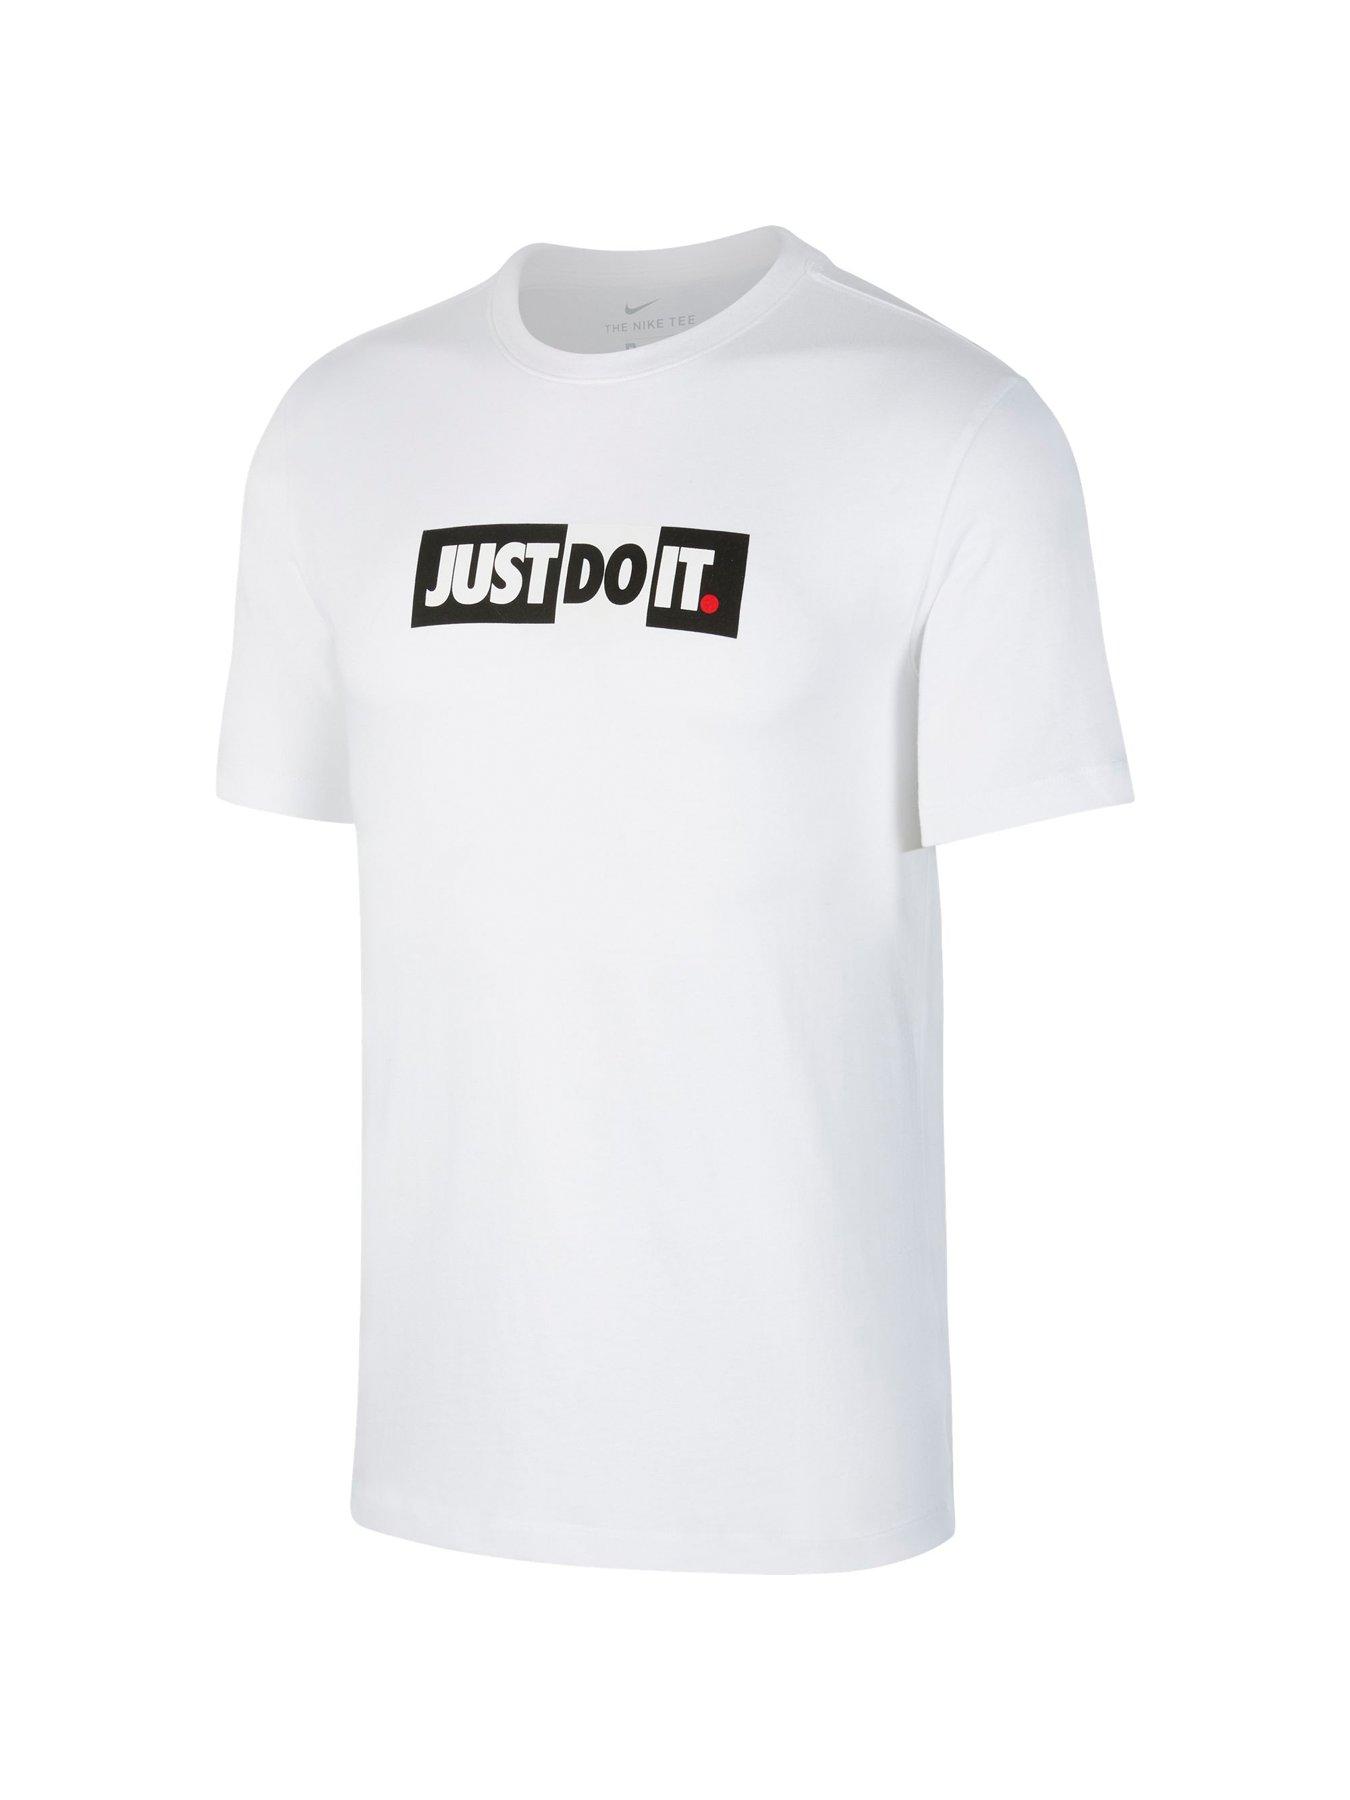 Nike Training Top Polo Shirt Long Sleeve Rugby Football Sports Navy Sz Small 40”